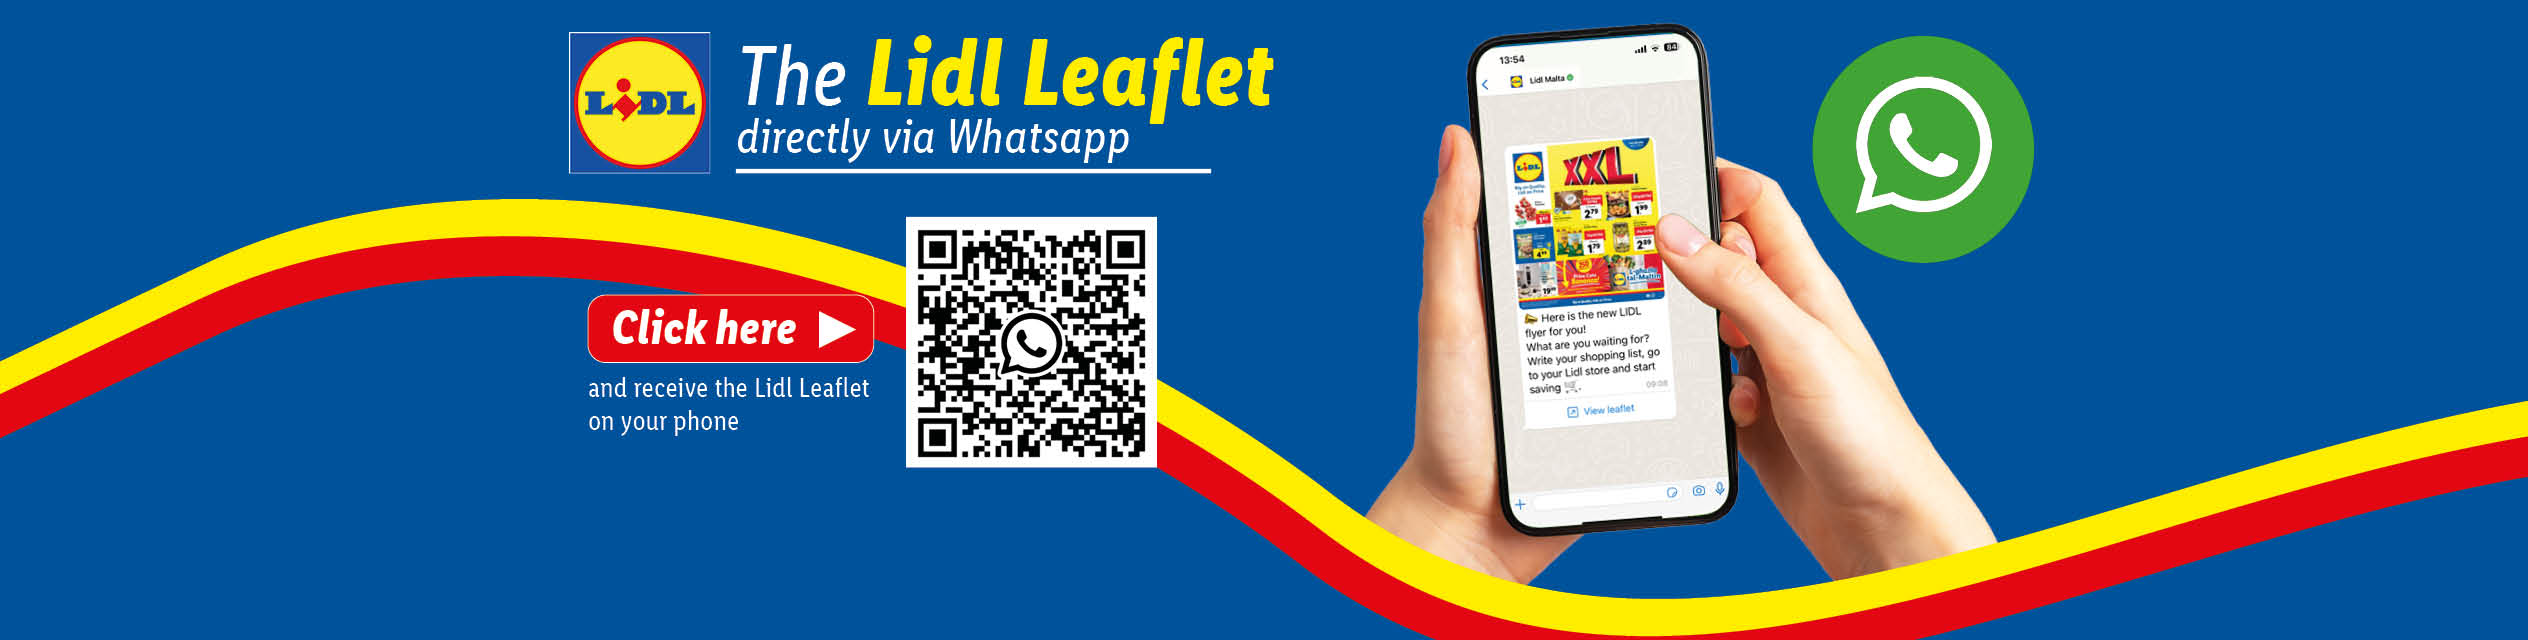 The Lidl Leaflet on Whatsapp